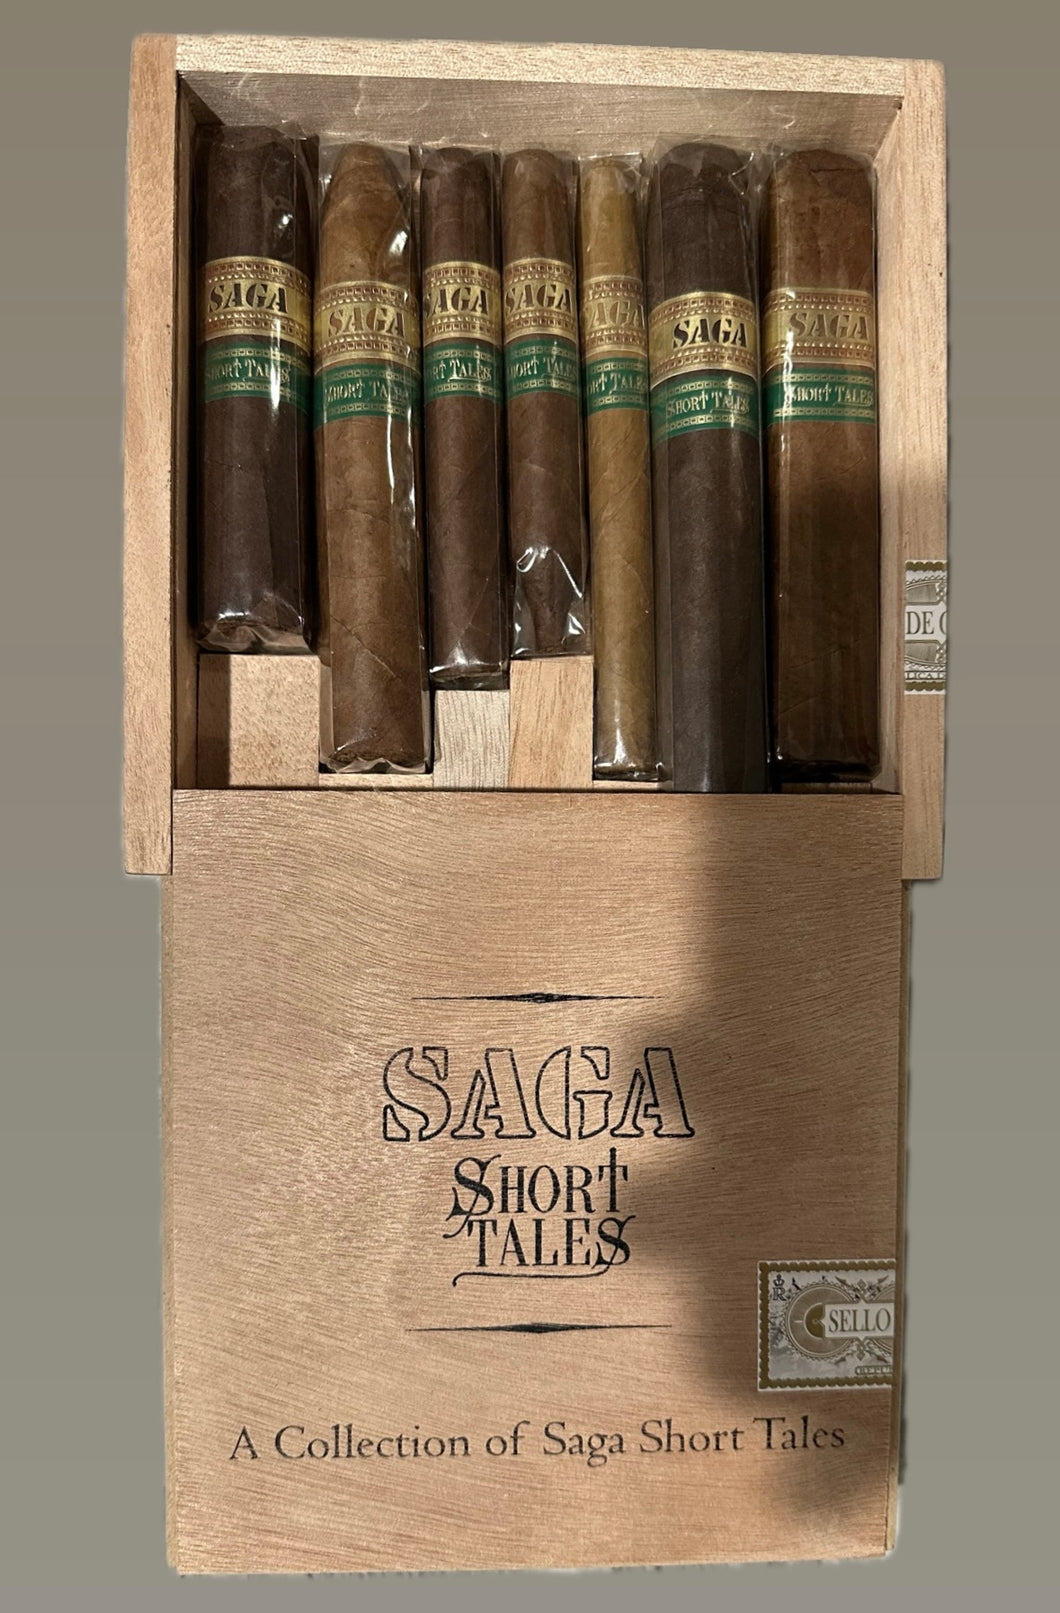 Saga Gift Box Sampler